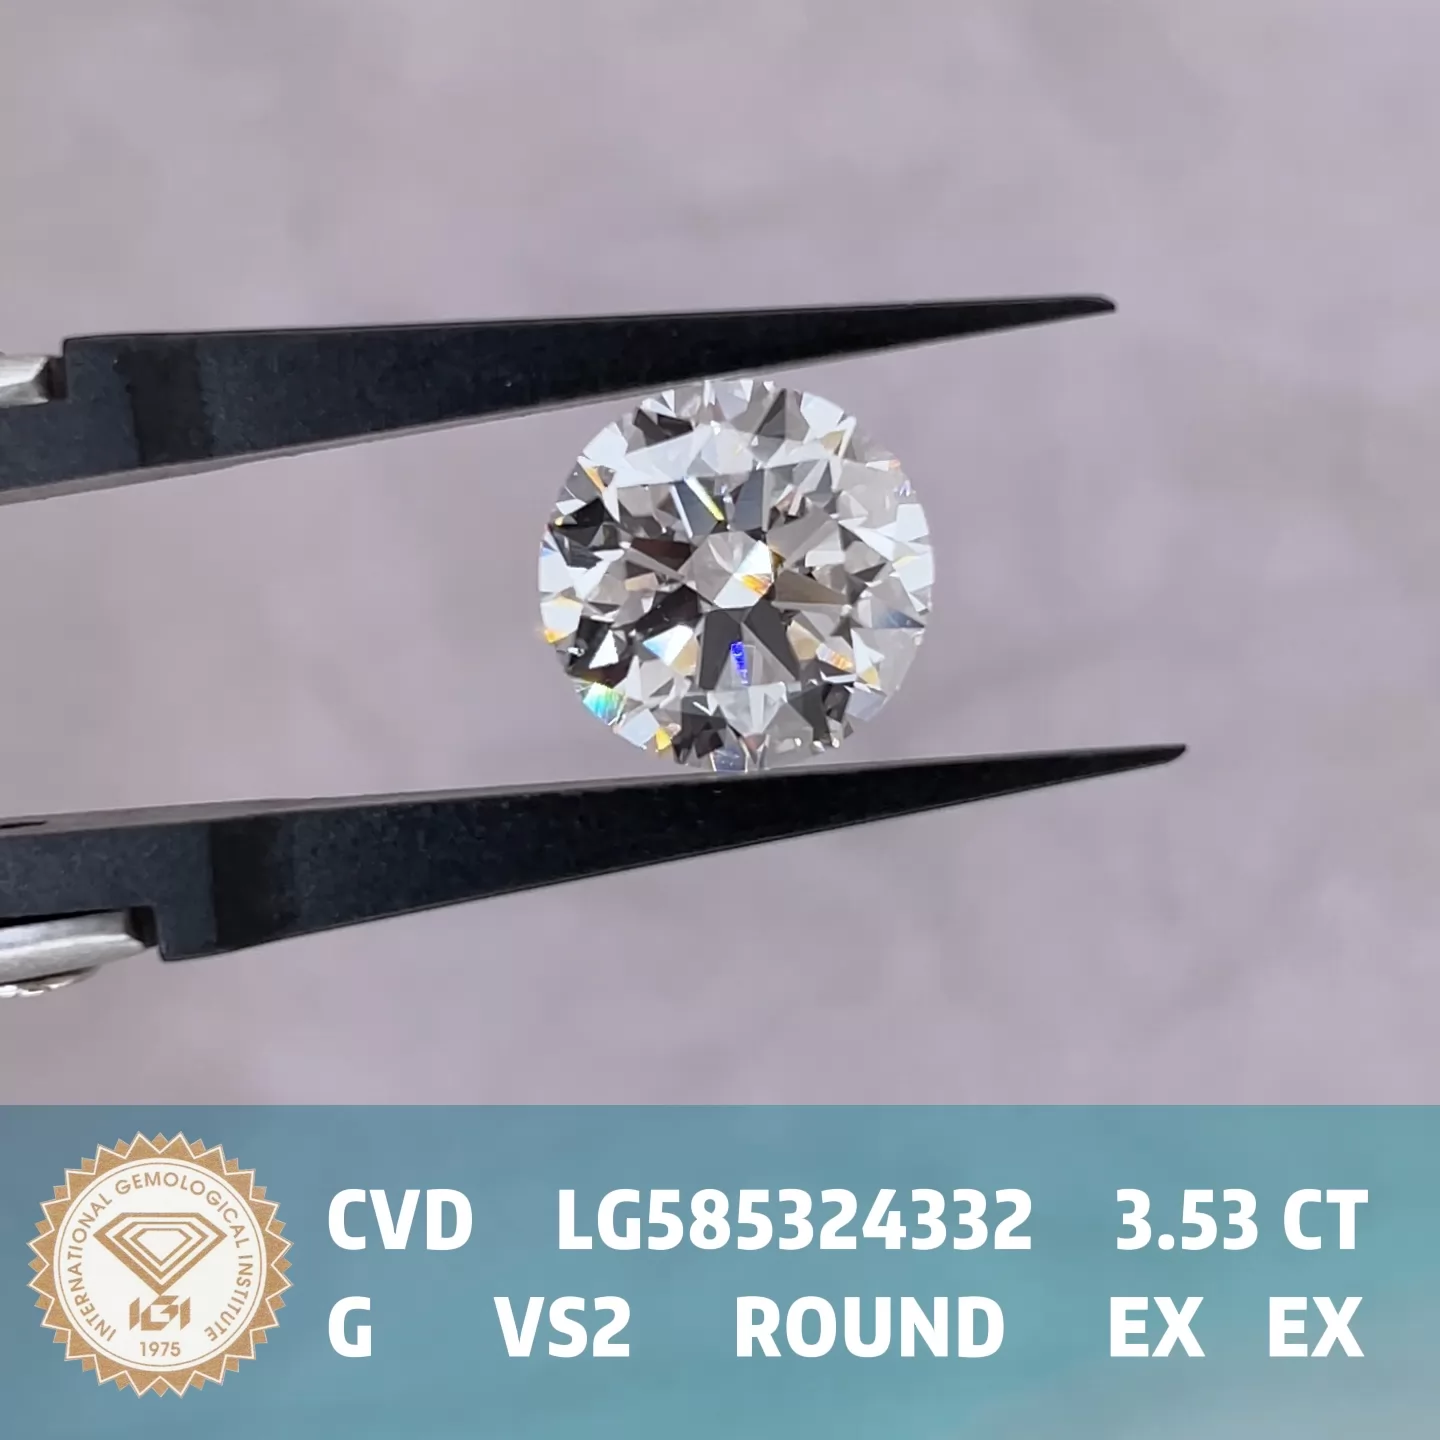 Round Brilliant Cut 3.53ct G Color CVD Lab Grown Diamond